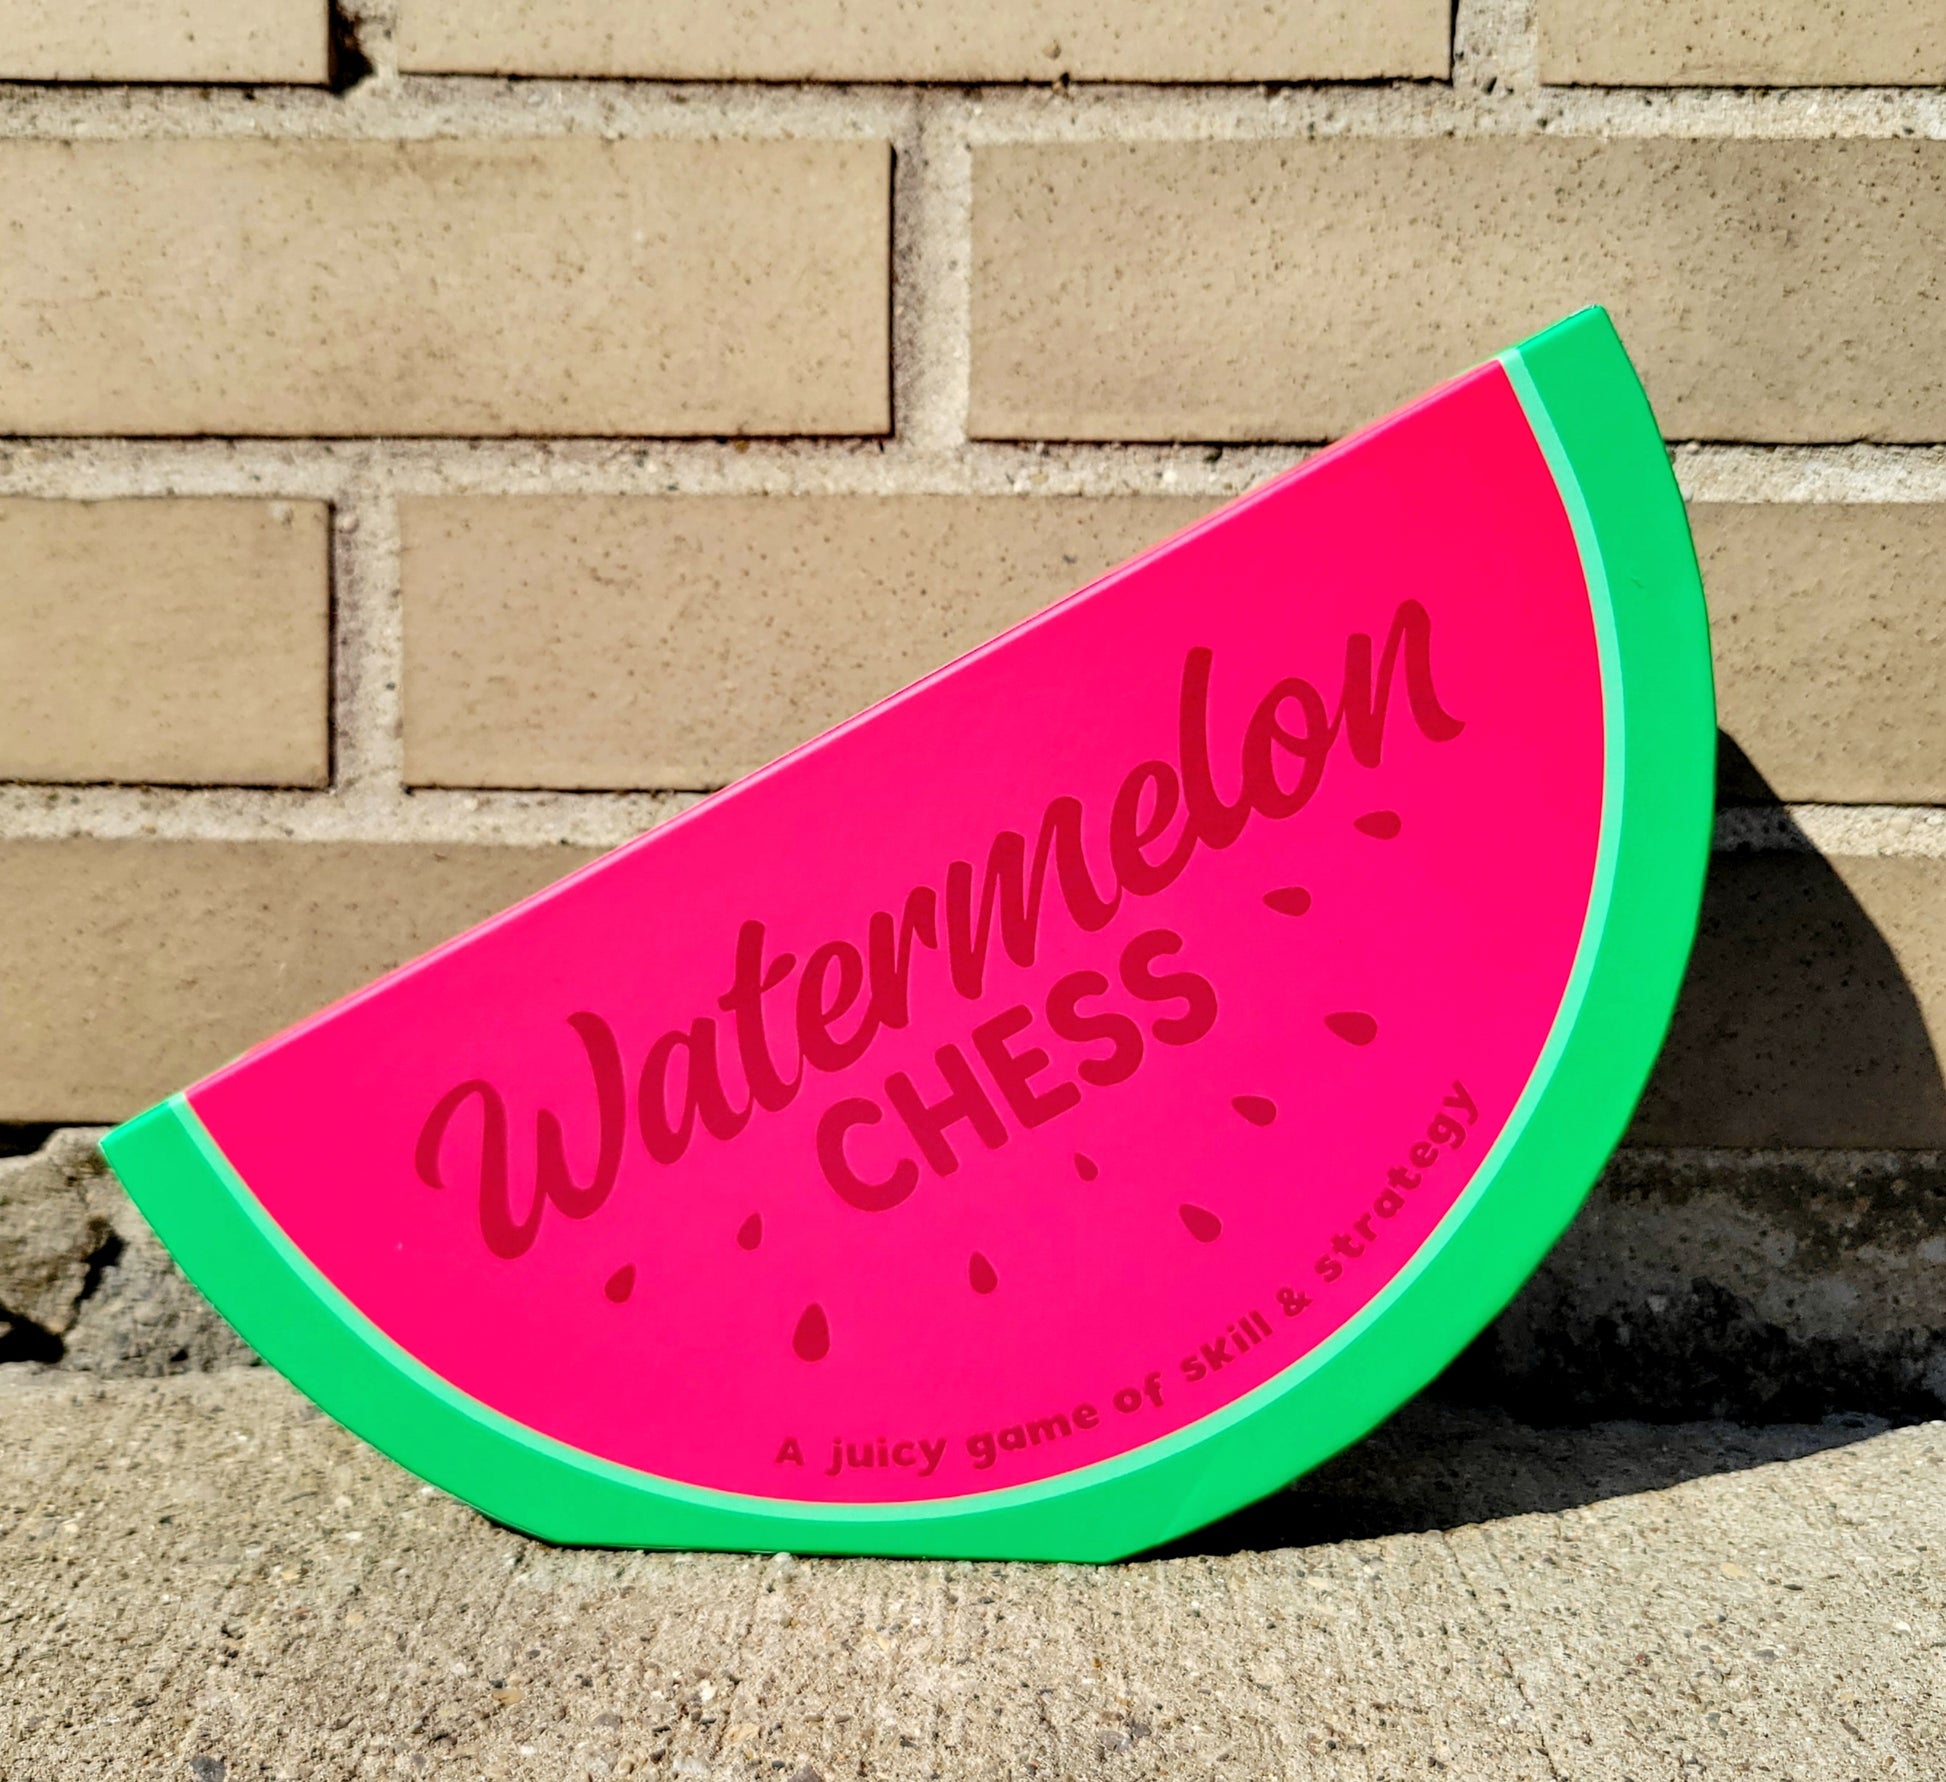 Watermelon Chess Game